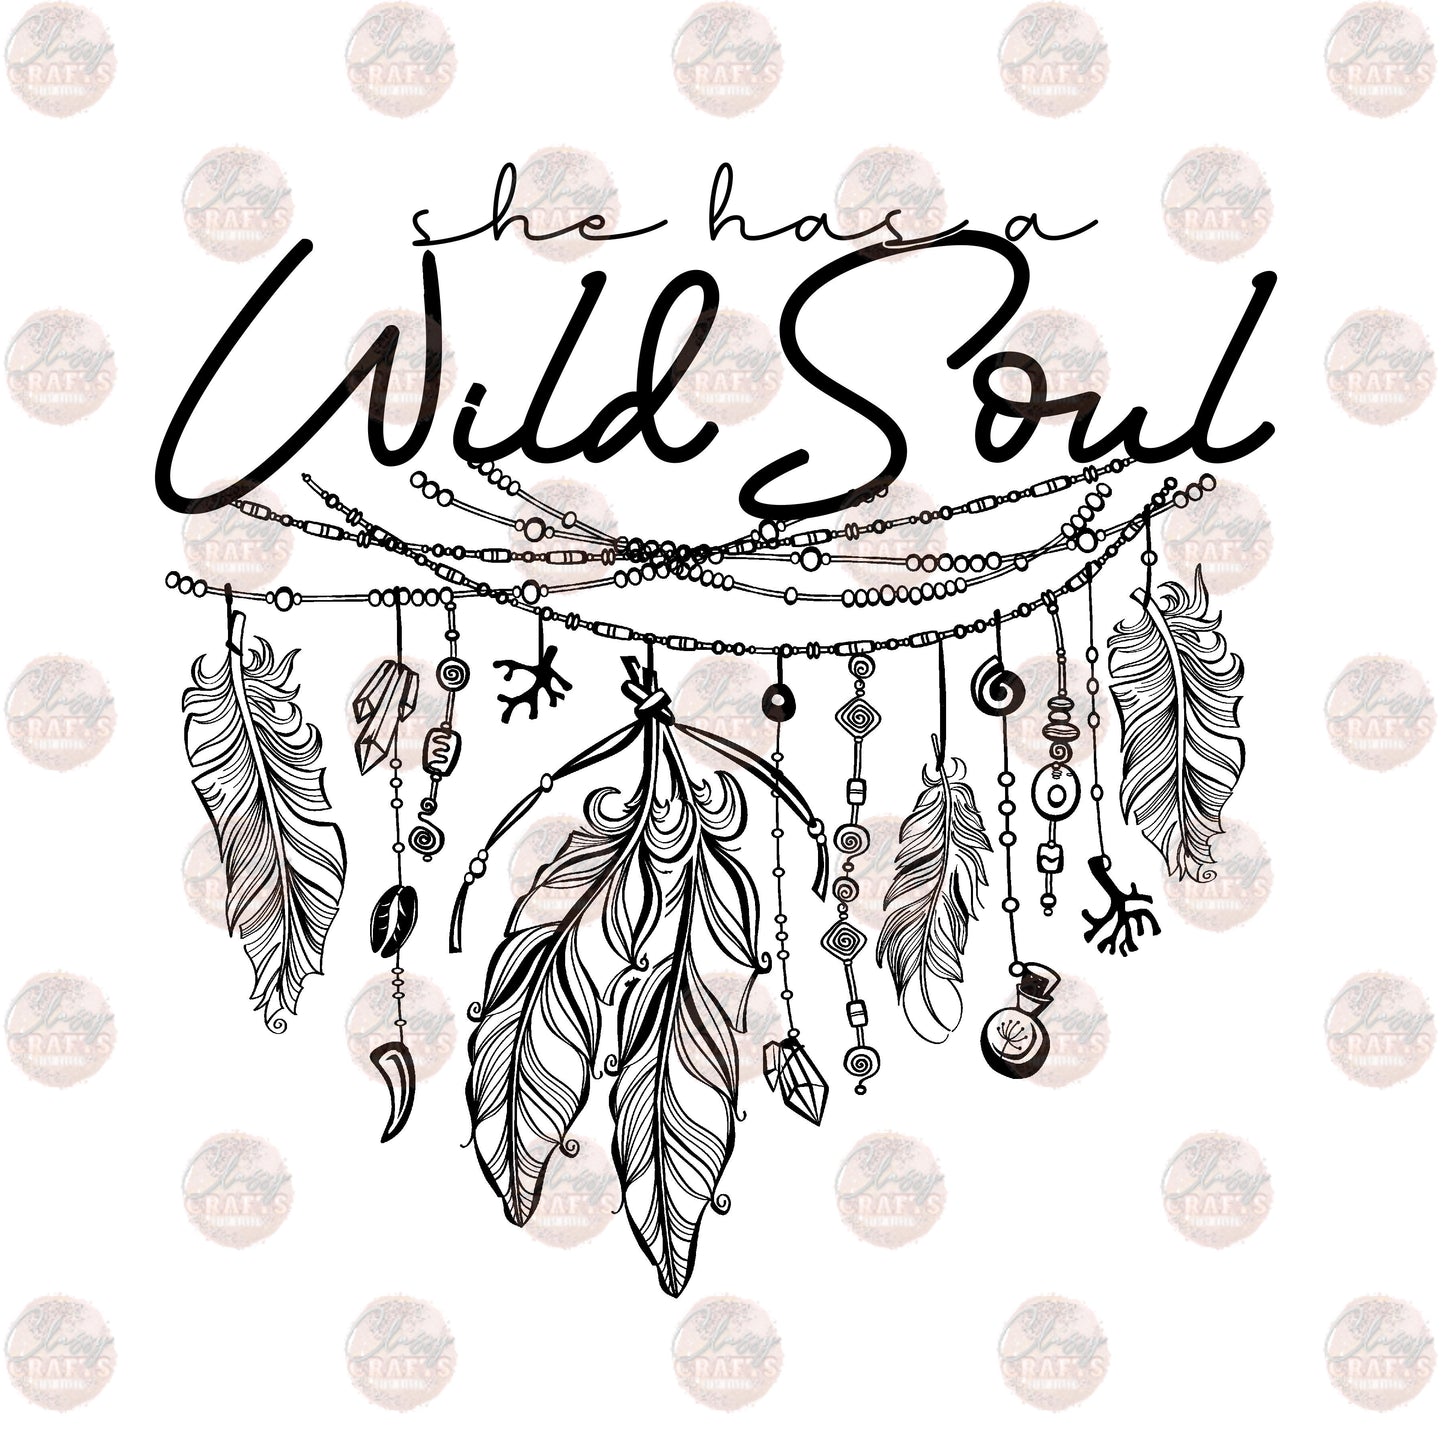 Wild Soul - Sublimation Transfer